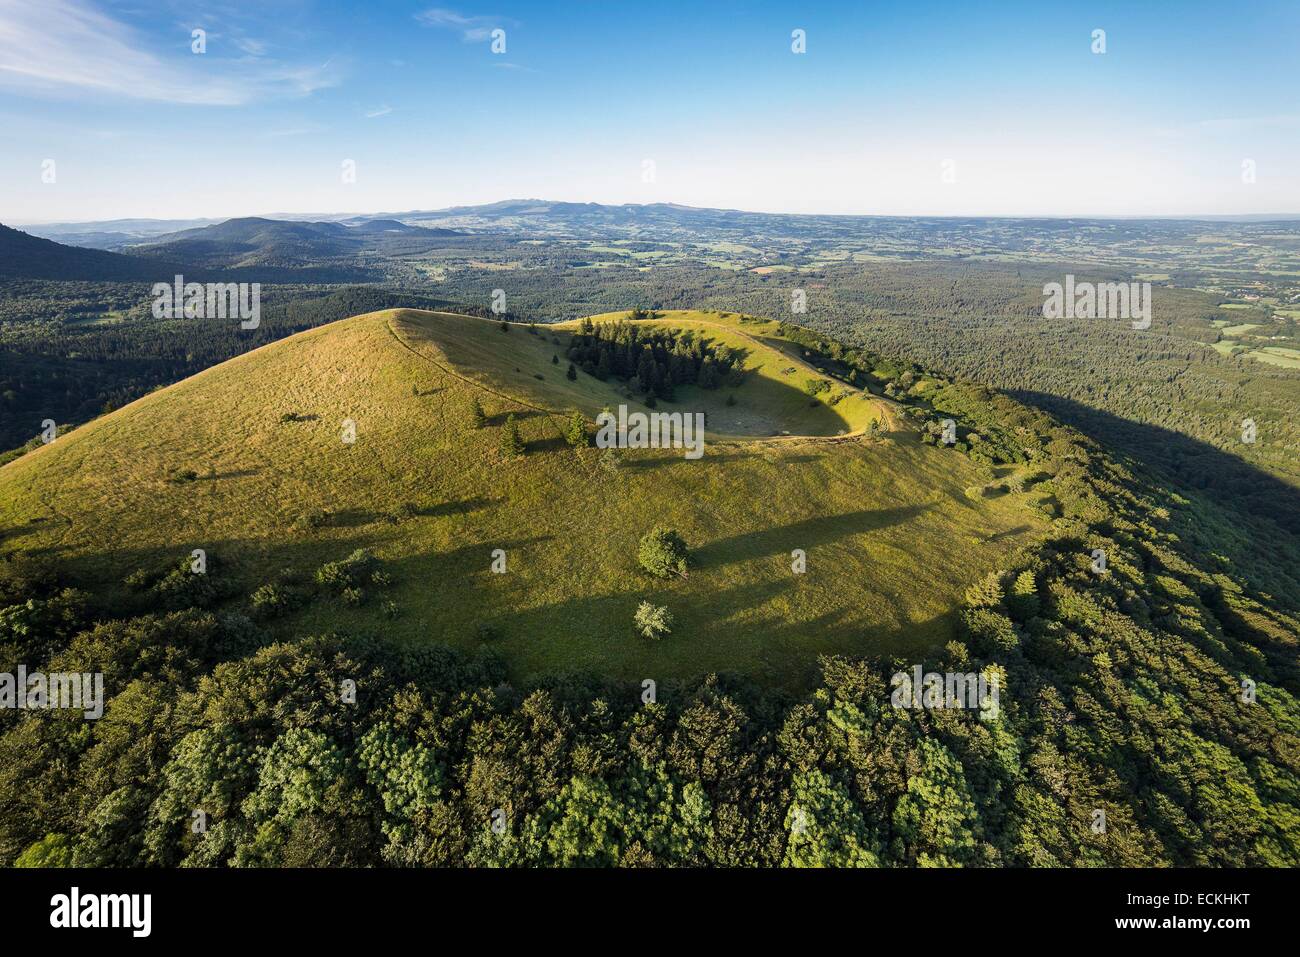 Frankreich, Puy de Dome, Ceyssat, Chaine des Puys, regionalen Naturpark der Auvergne Vulkane, der Puy de C⌠me (Luftbild) Stockfoto